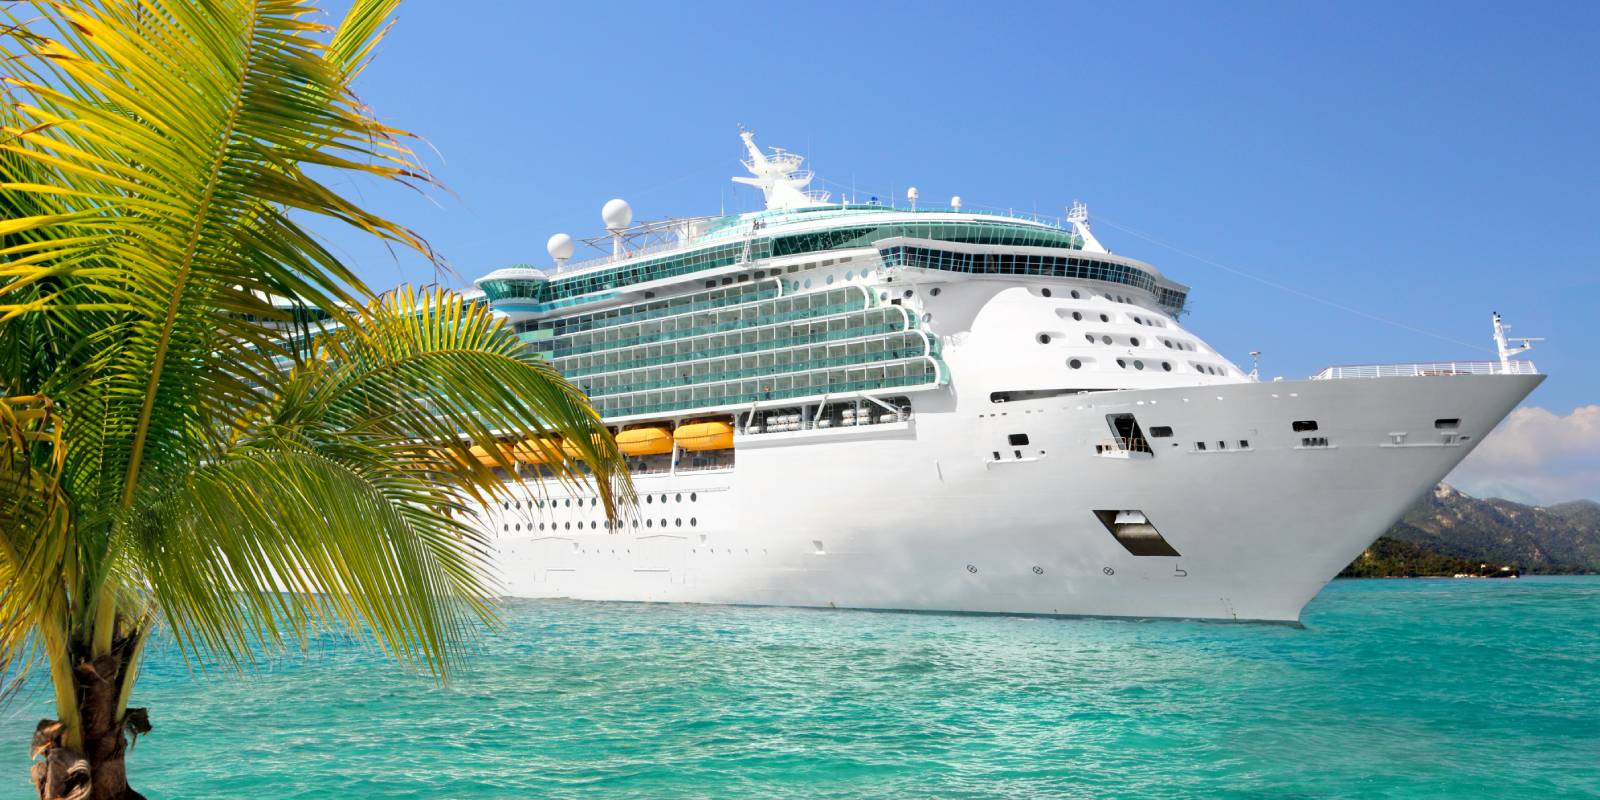 Grand Luxe Destinations - Cruises